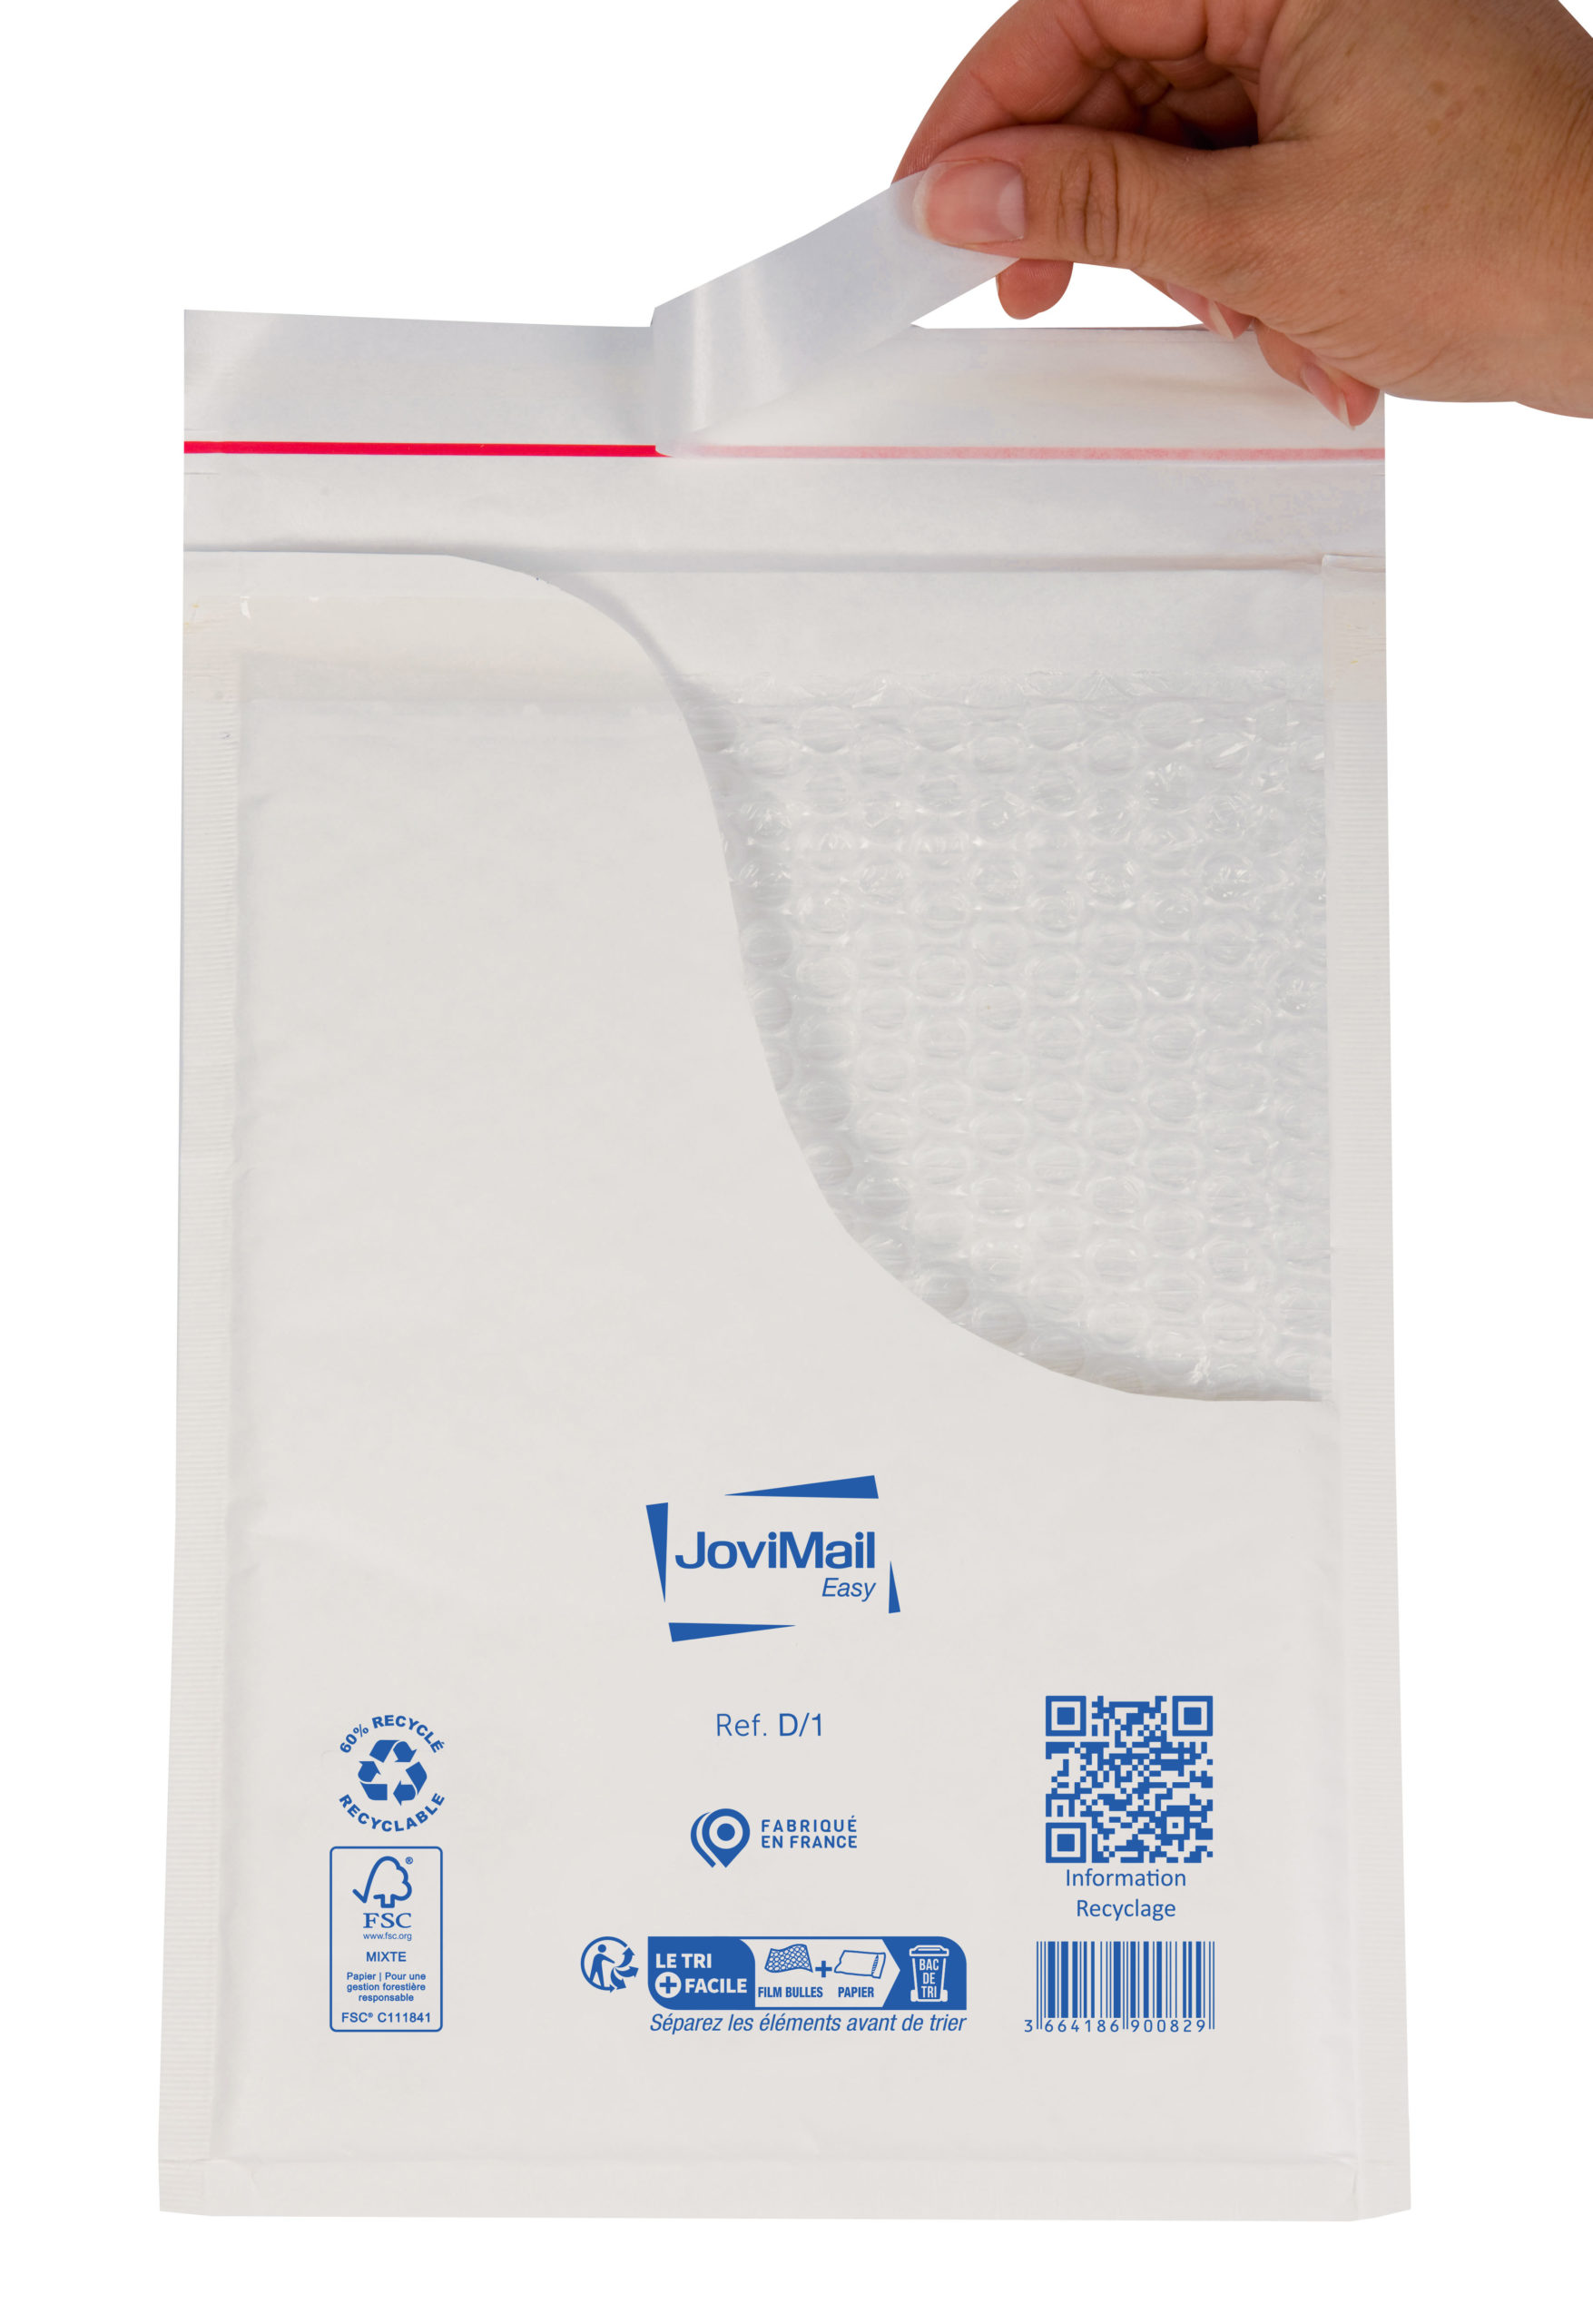 Enveloppe bulle plastique Mail Lite Tuff JoviMail®Ecobulle taille D/1 -  180x260